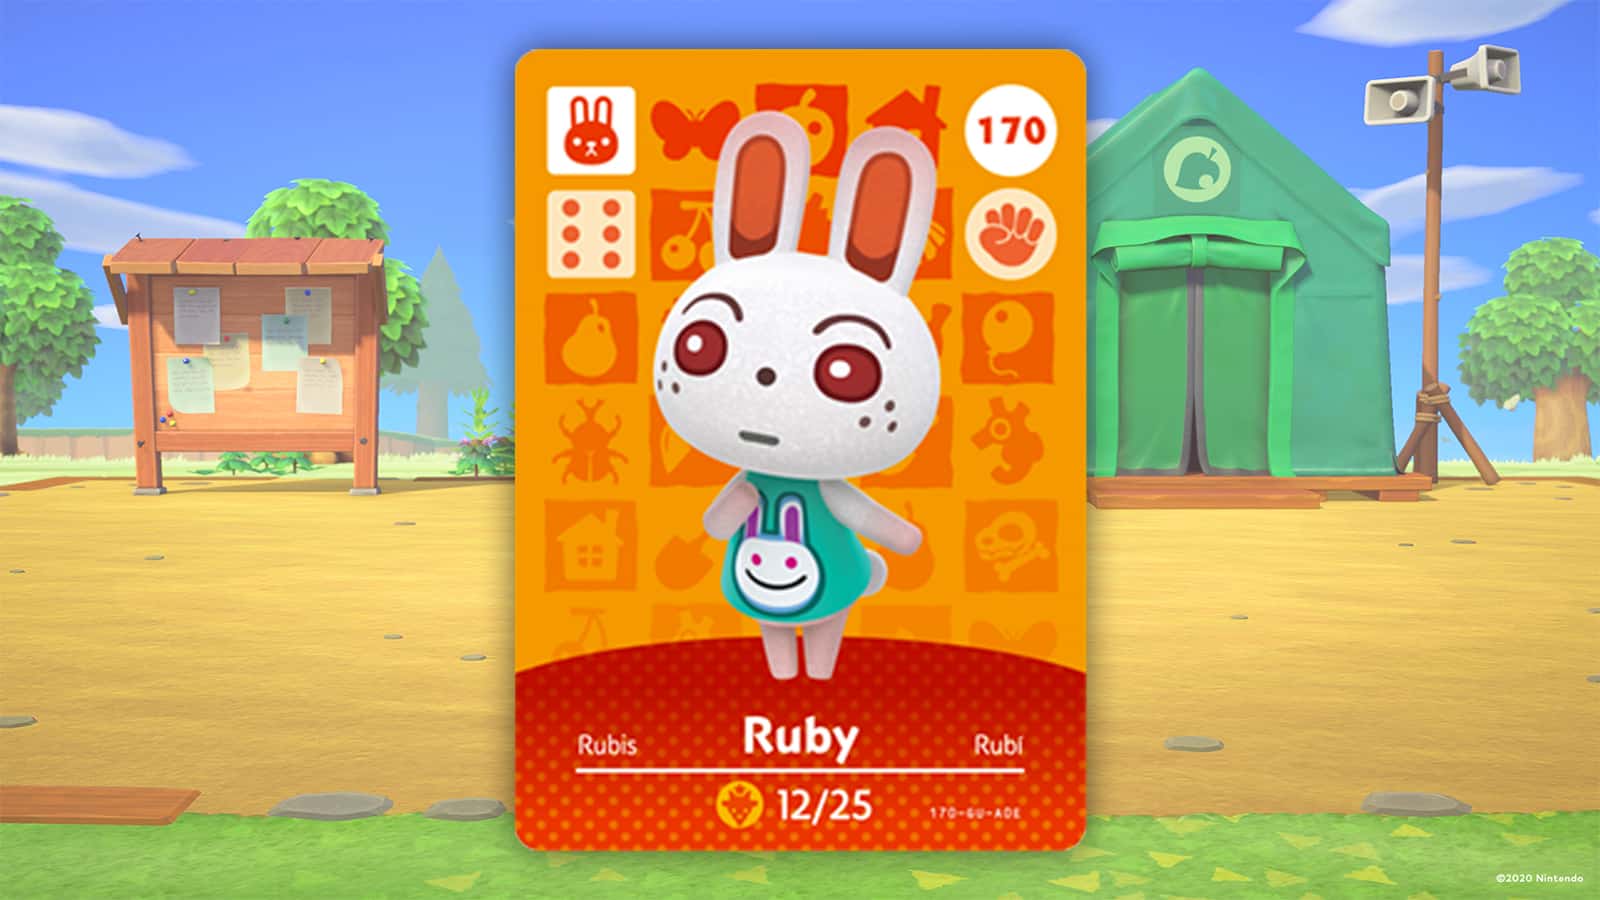 Rubin-Amiibo-Karte in Animal Crossing New Horizons